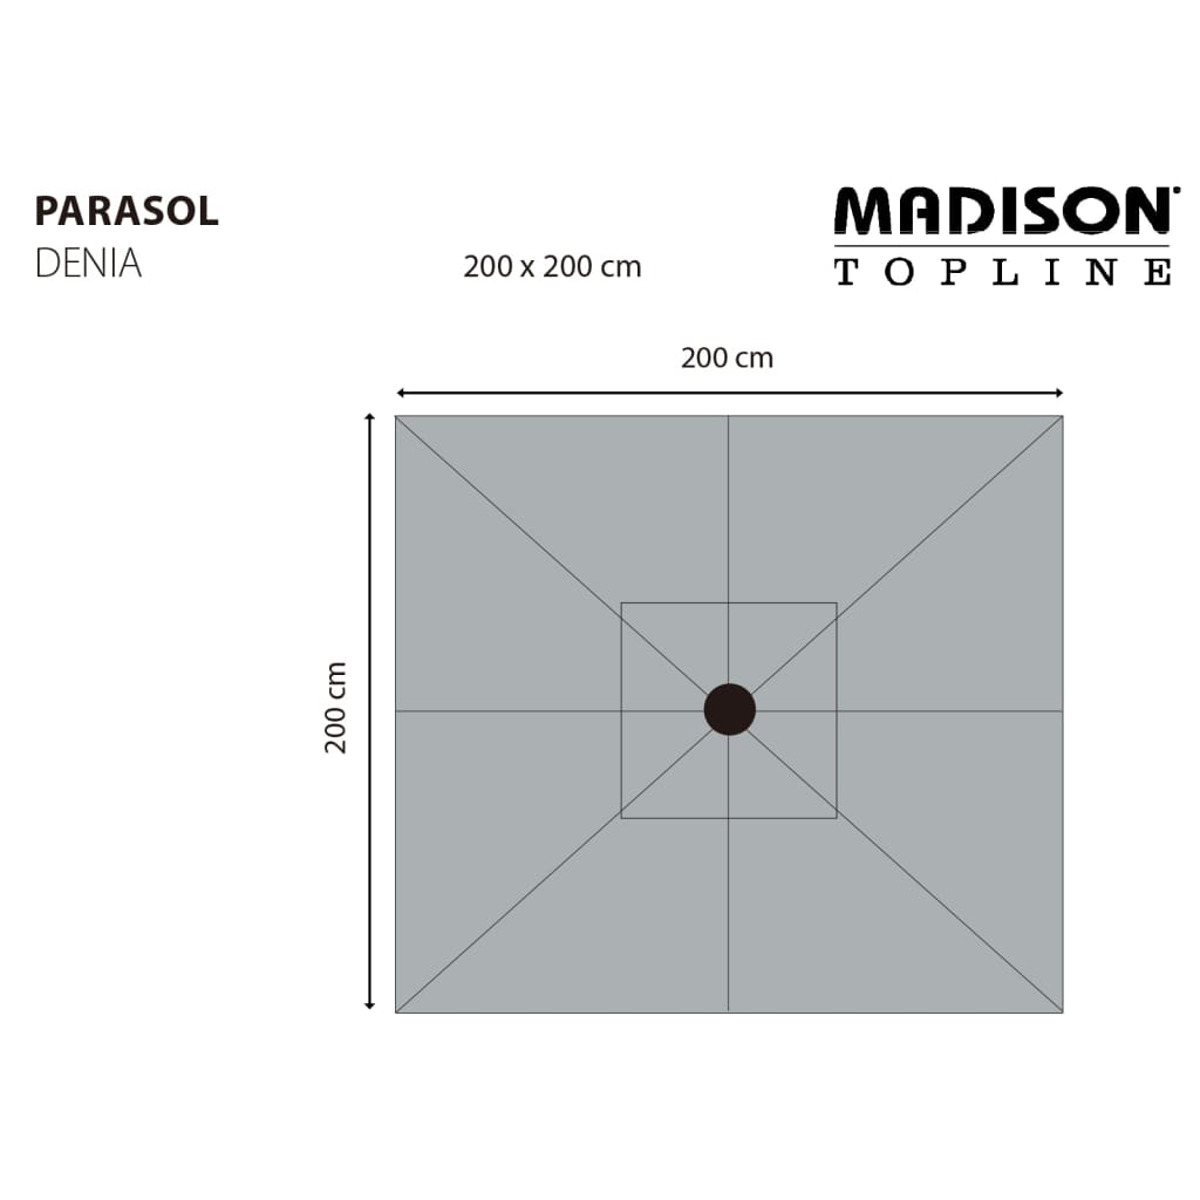 MADISON 447152 Sonnenschirm, Grau